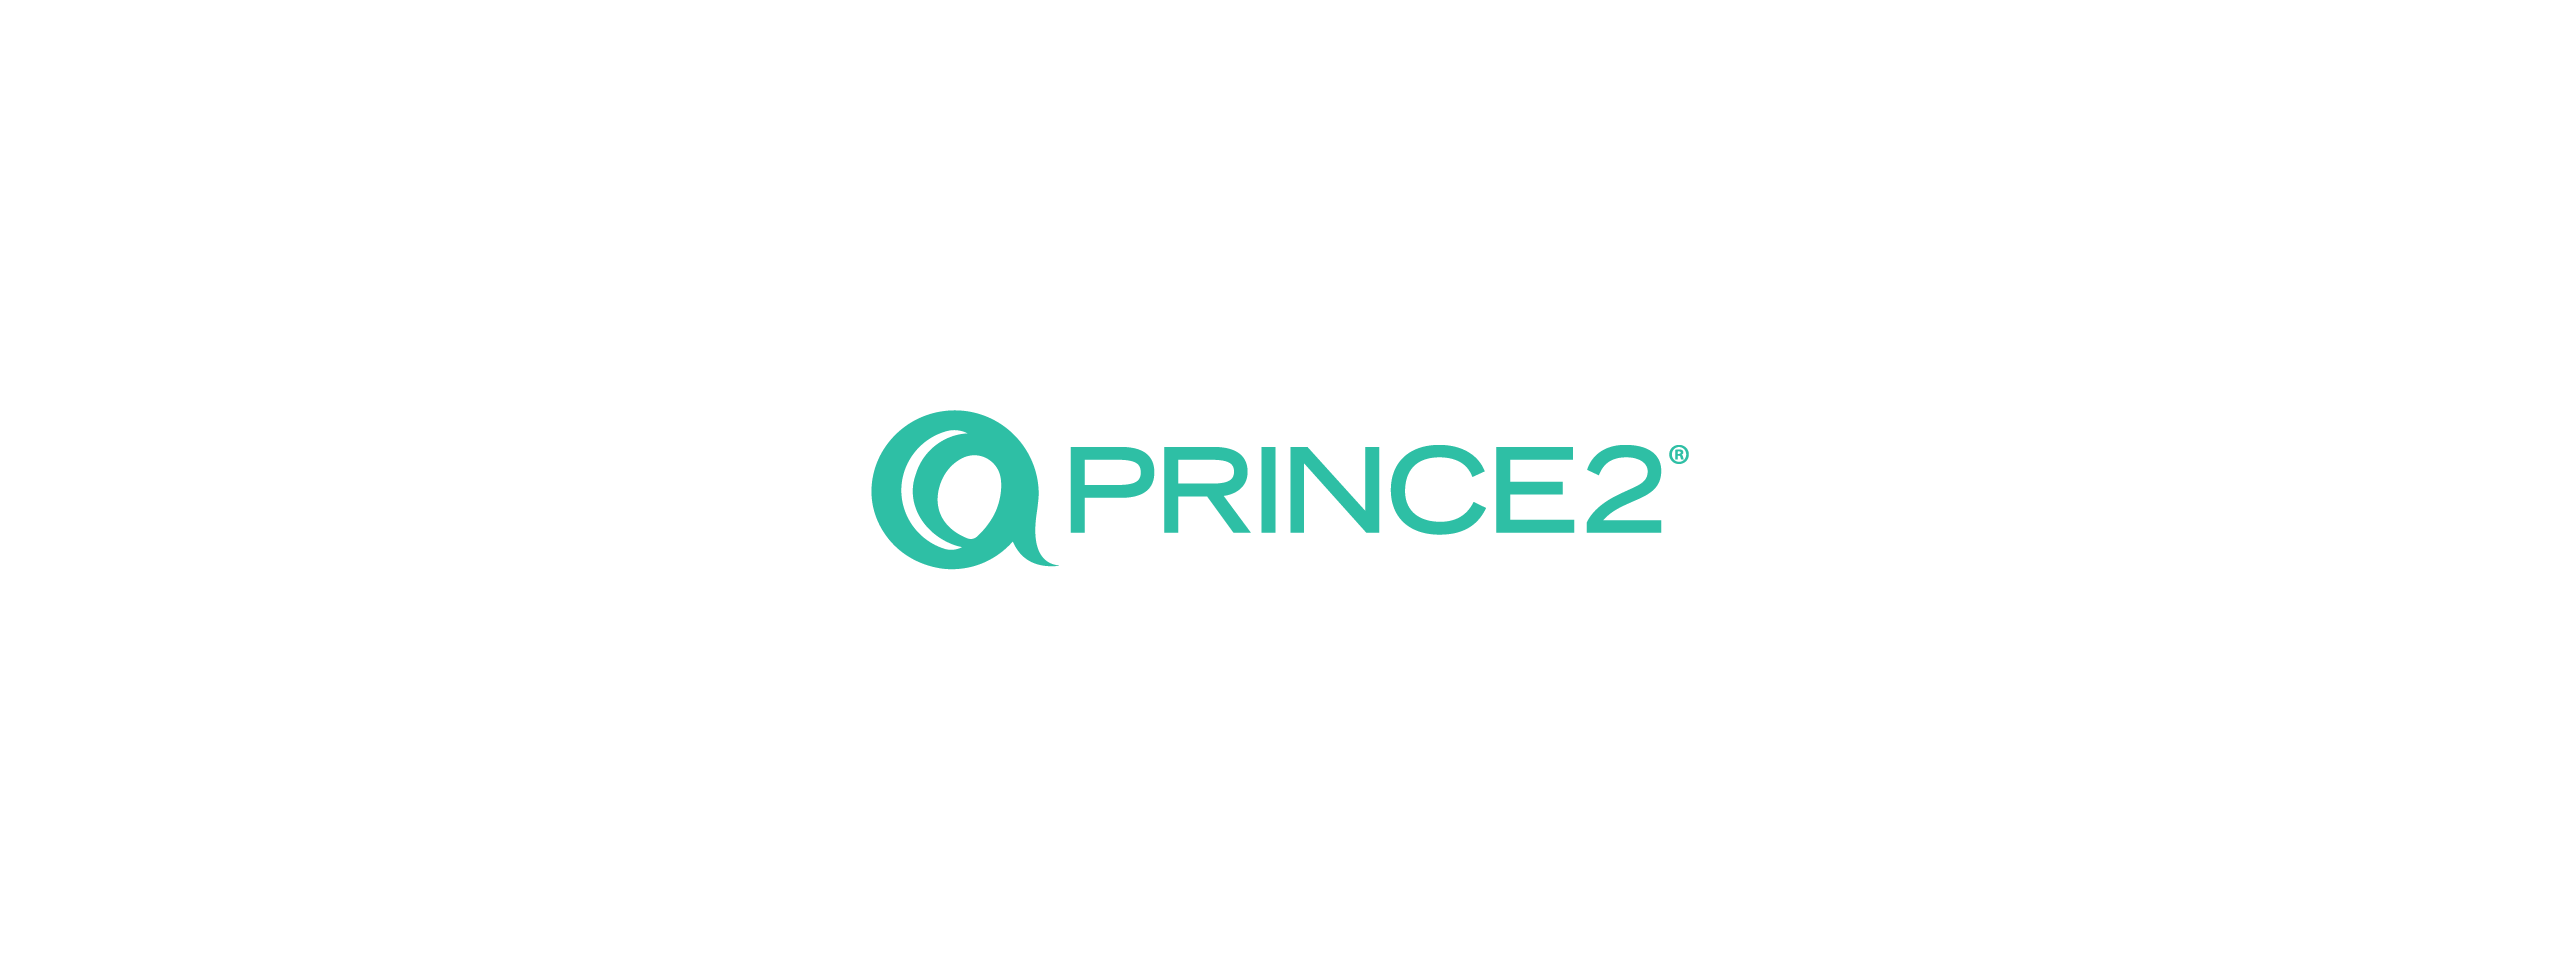 PRINCE2 logo